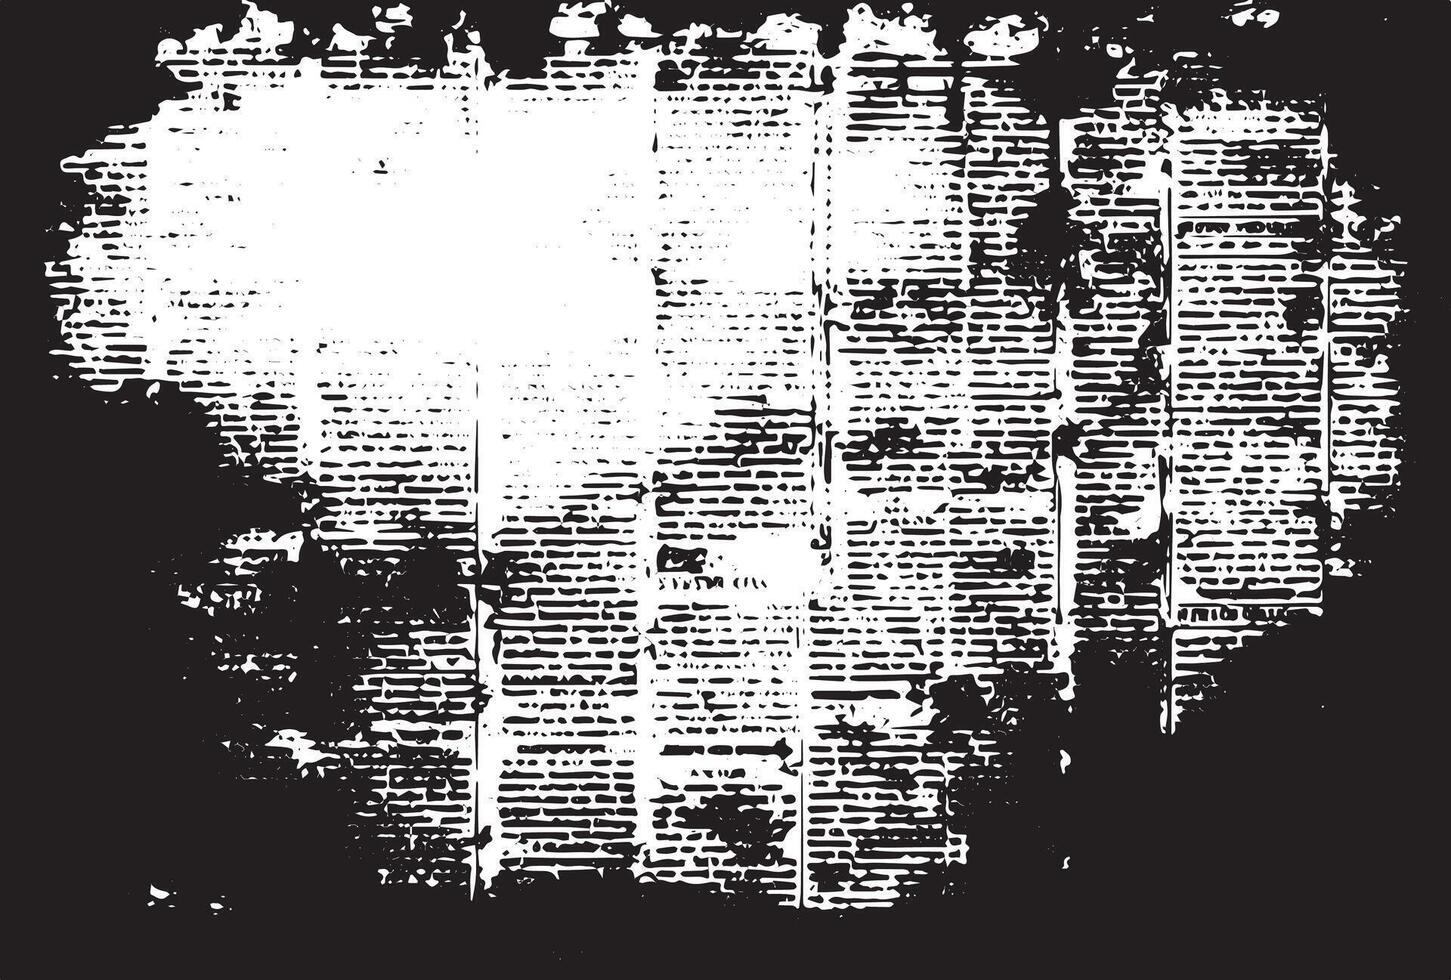 OLD DARK SCRATCHED PAPER TEXTURE BACKGROUND VINTAGE NEWSPAPER PATTERN vector